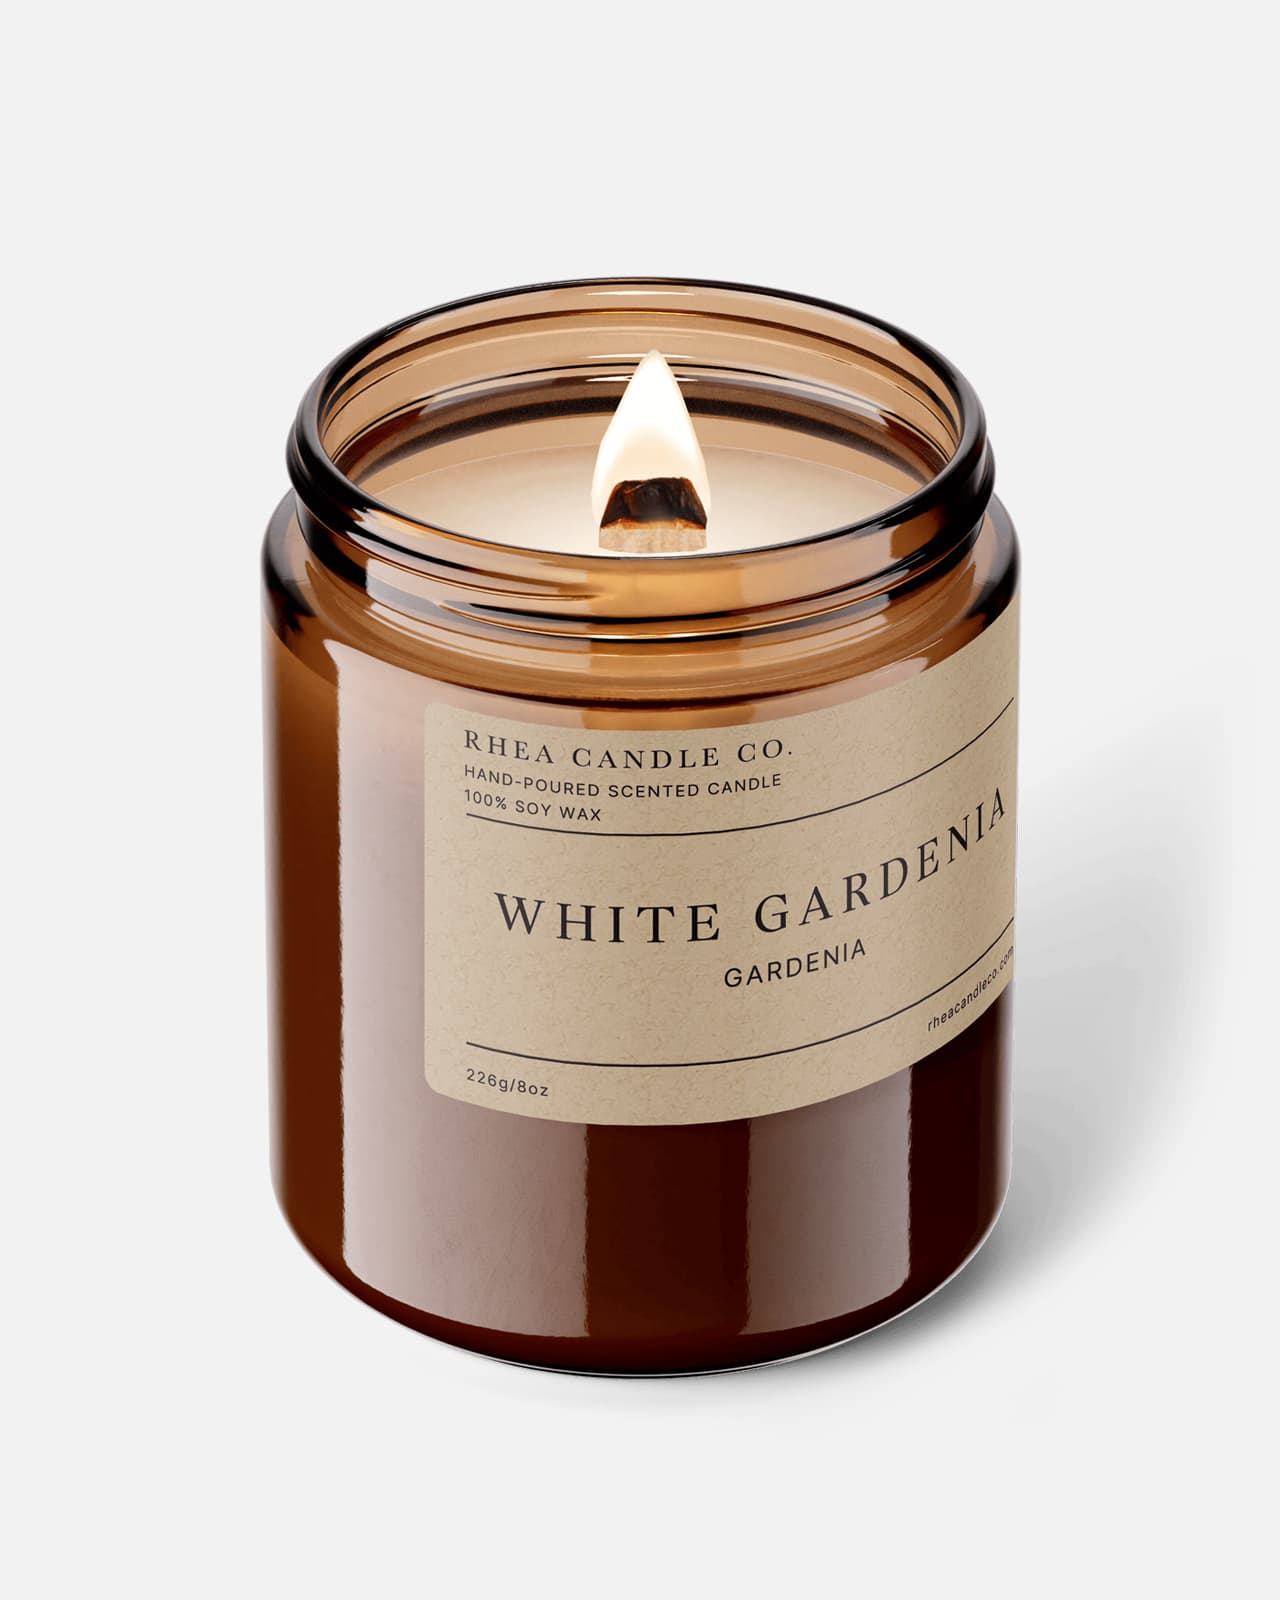 White Gardenia Candle | Gardenia - Rhea Candle Co.